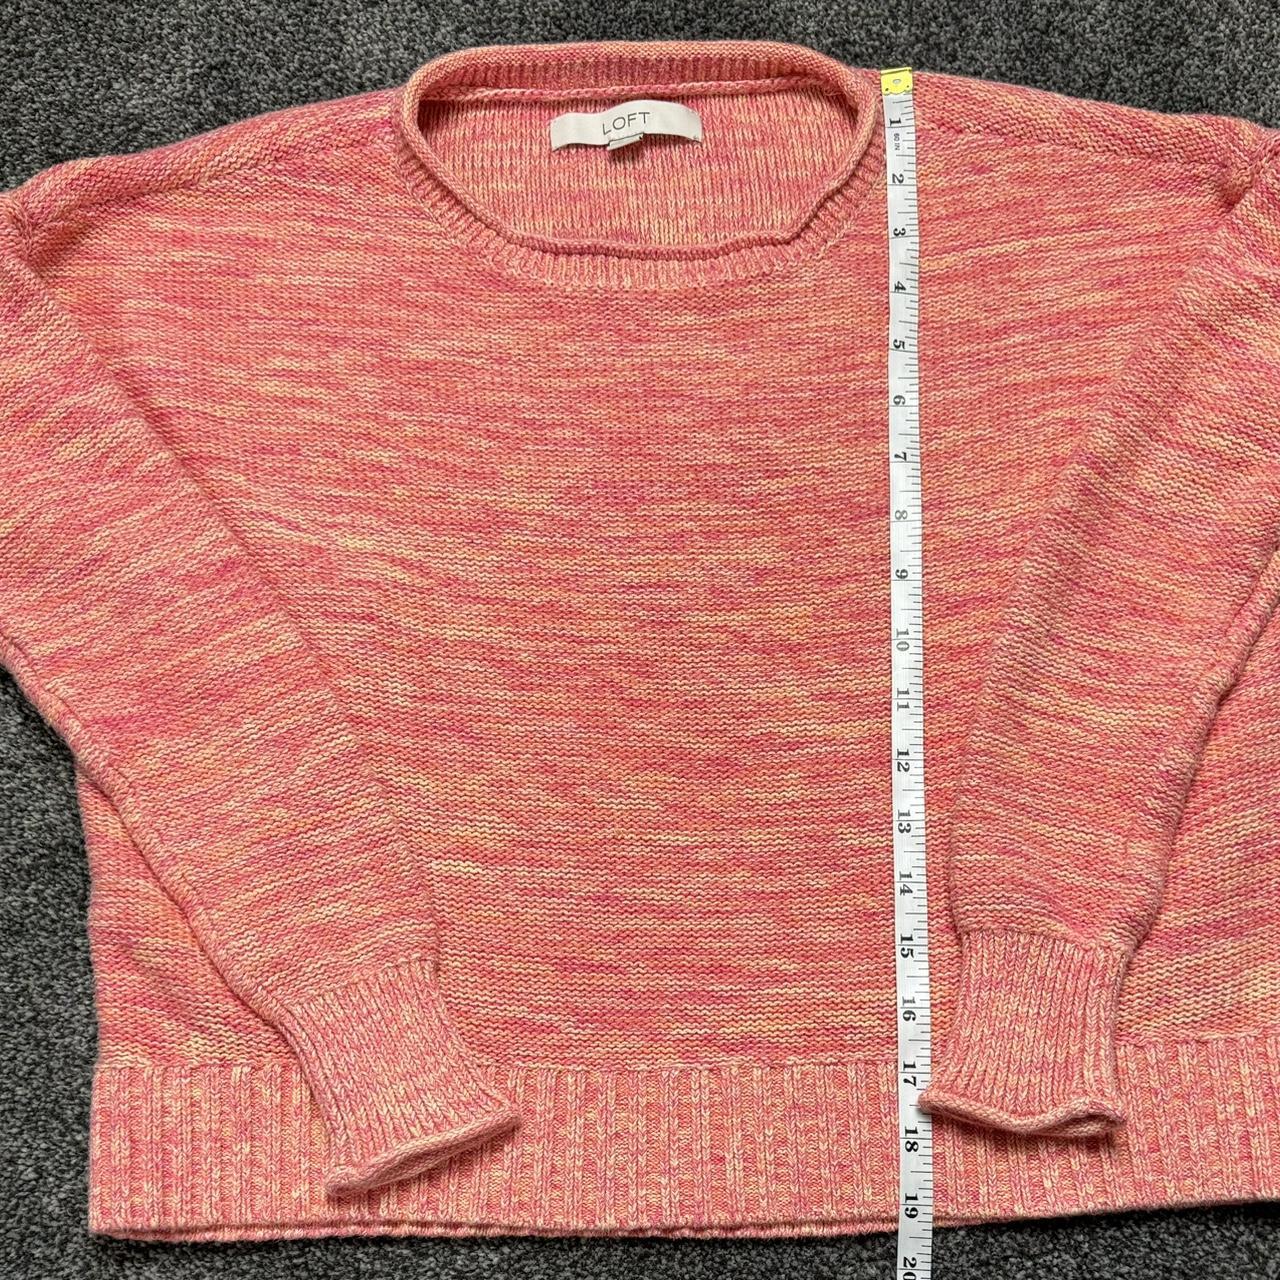 LOFT~Marled‎ Elliptical Hem~Pink Knit Sweater~Women's Size Small~Preowned